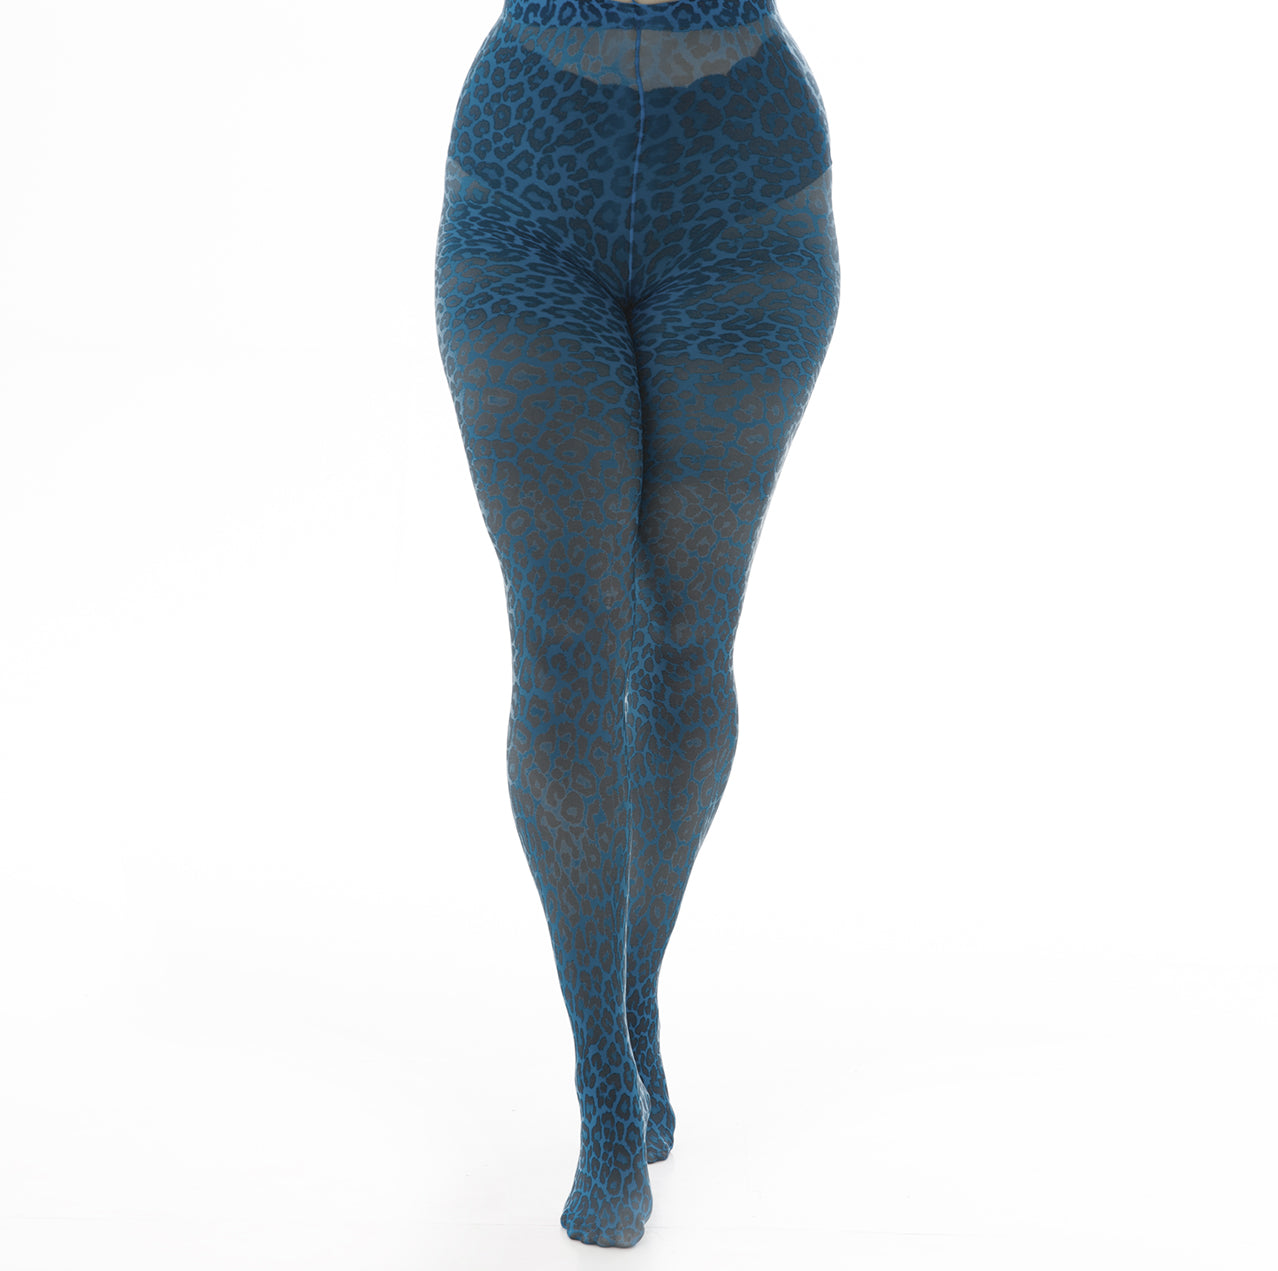 nsendm Women Tights Opening Leggings Leopard Print Pantihose Lingerie Pants  Stockings for Women Lingerie plus Size Underwear Blue One Size